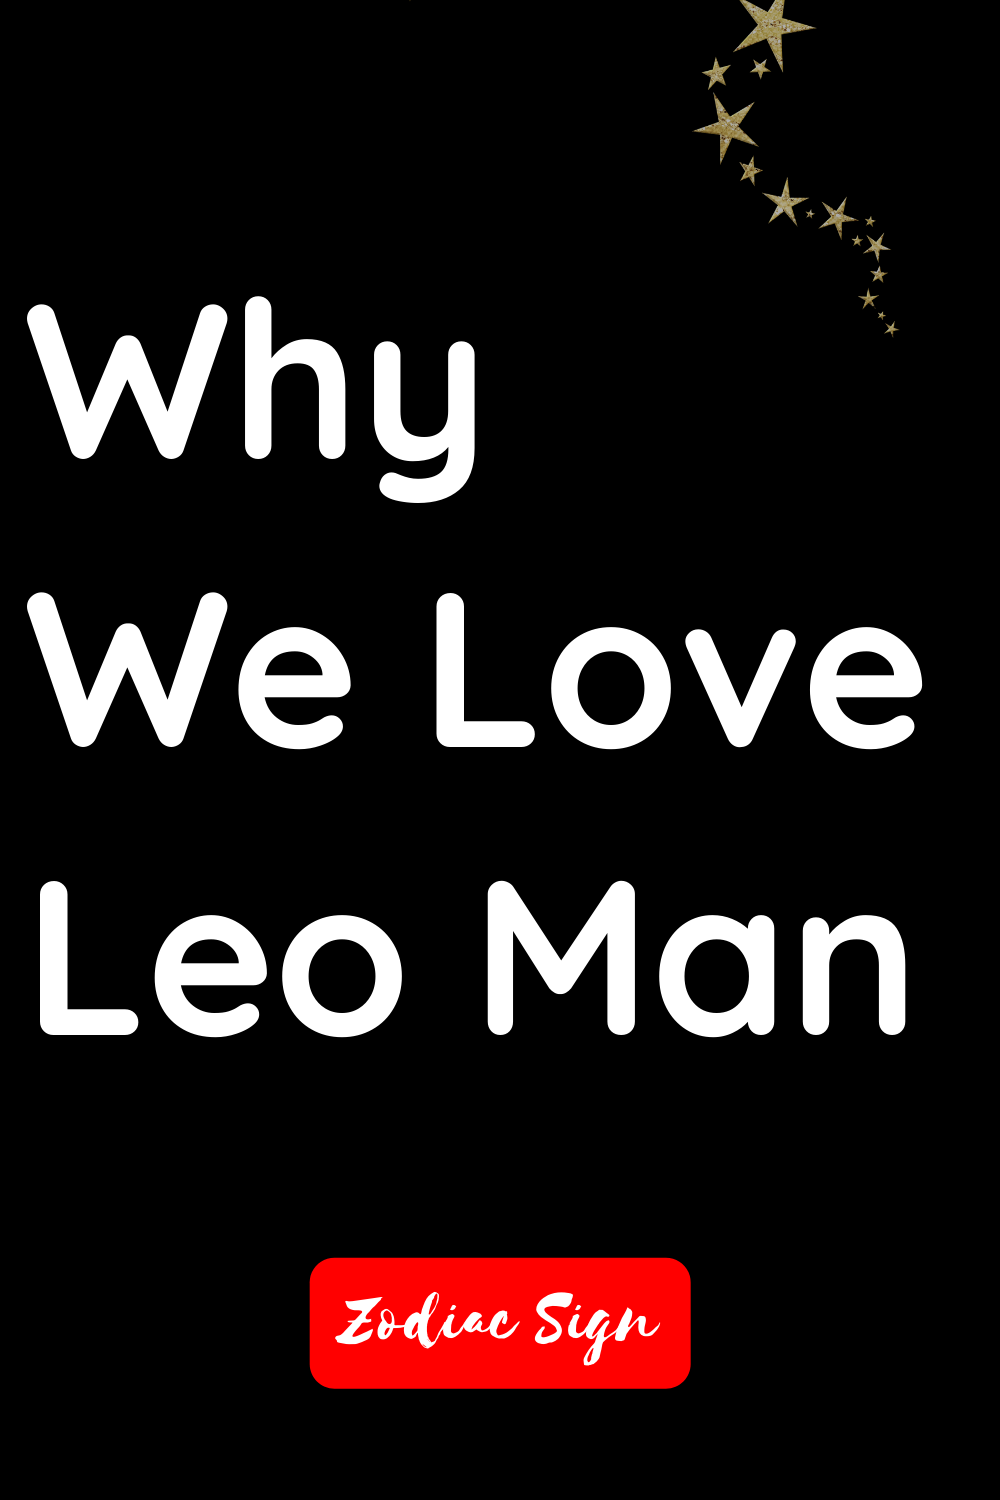 Why we love Leo man